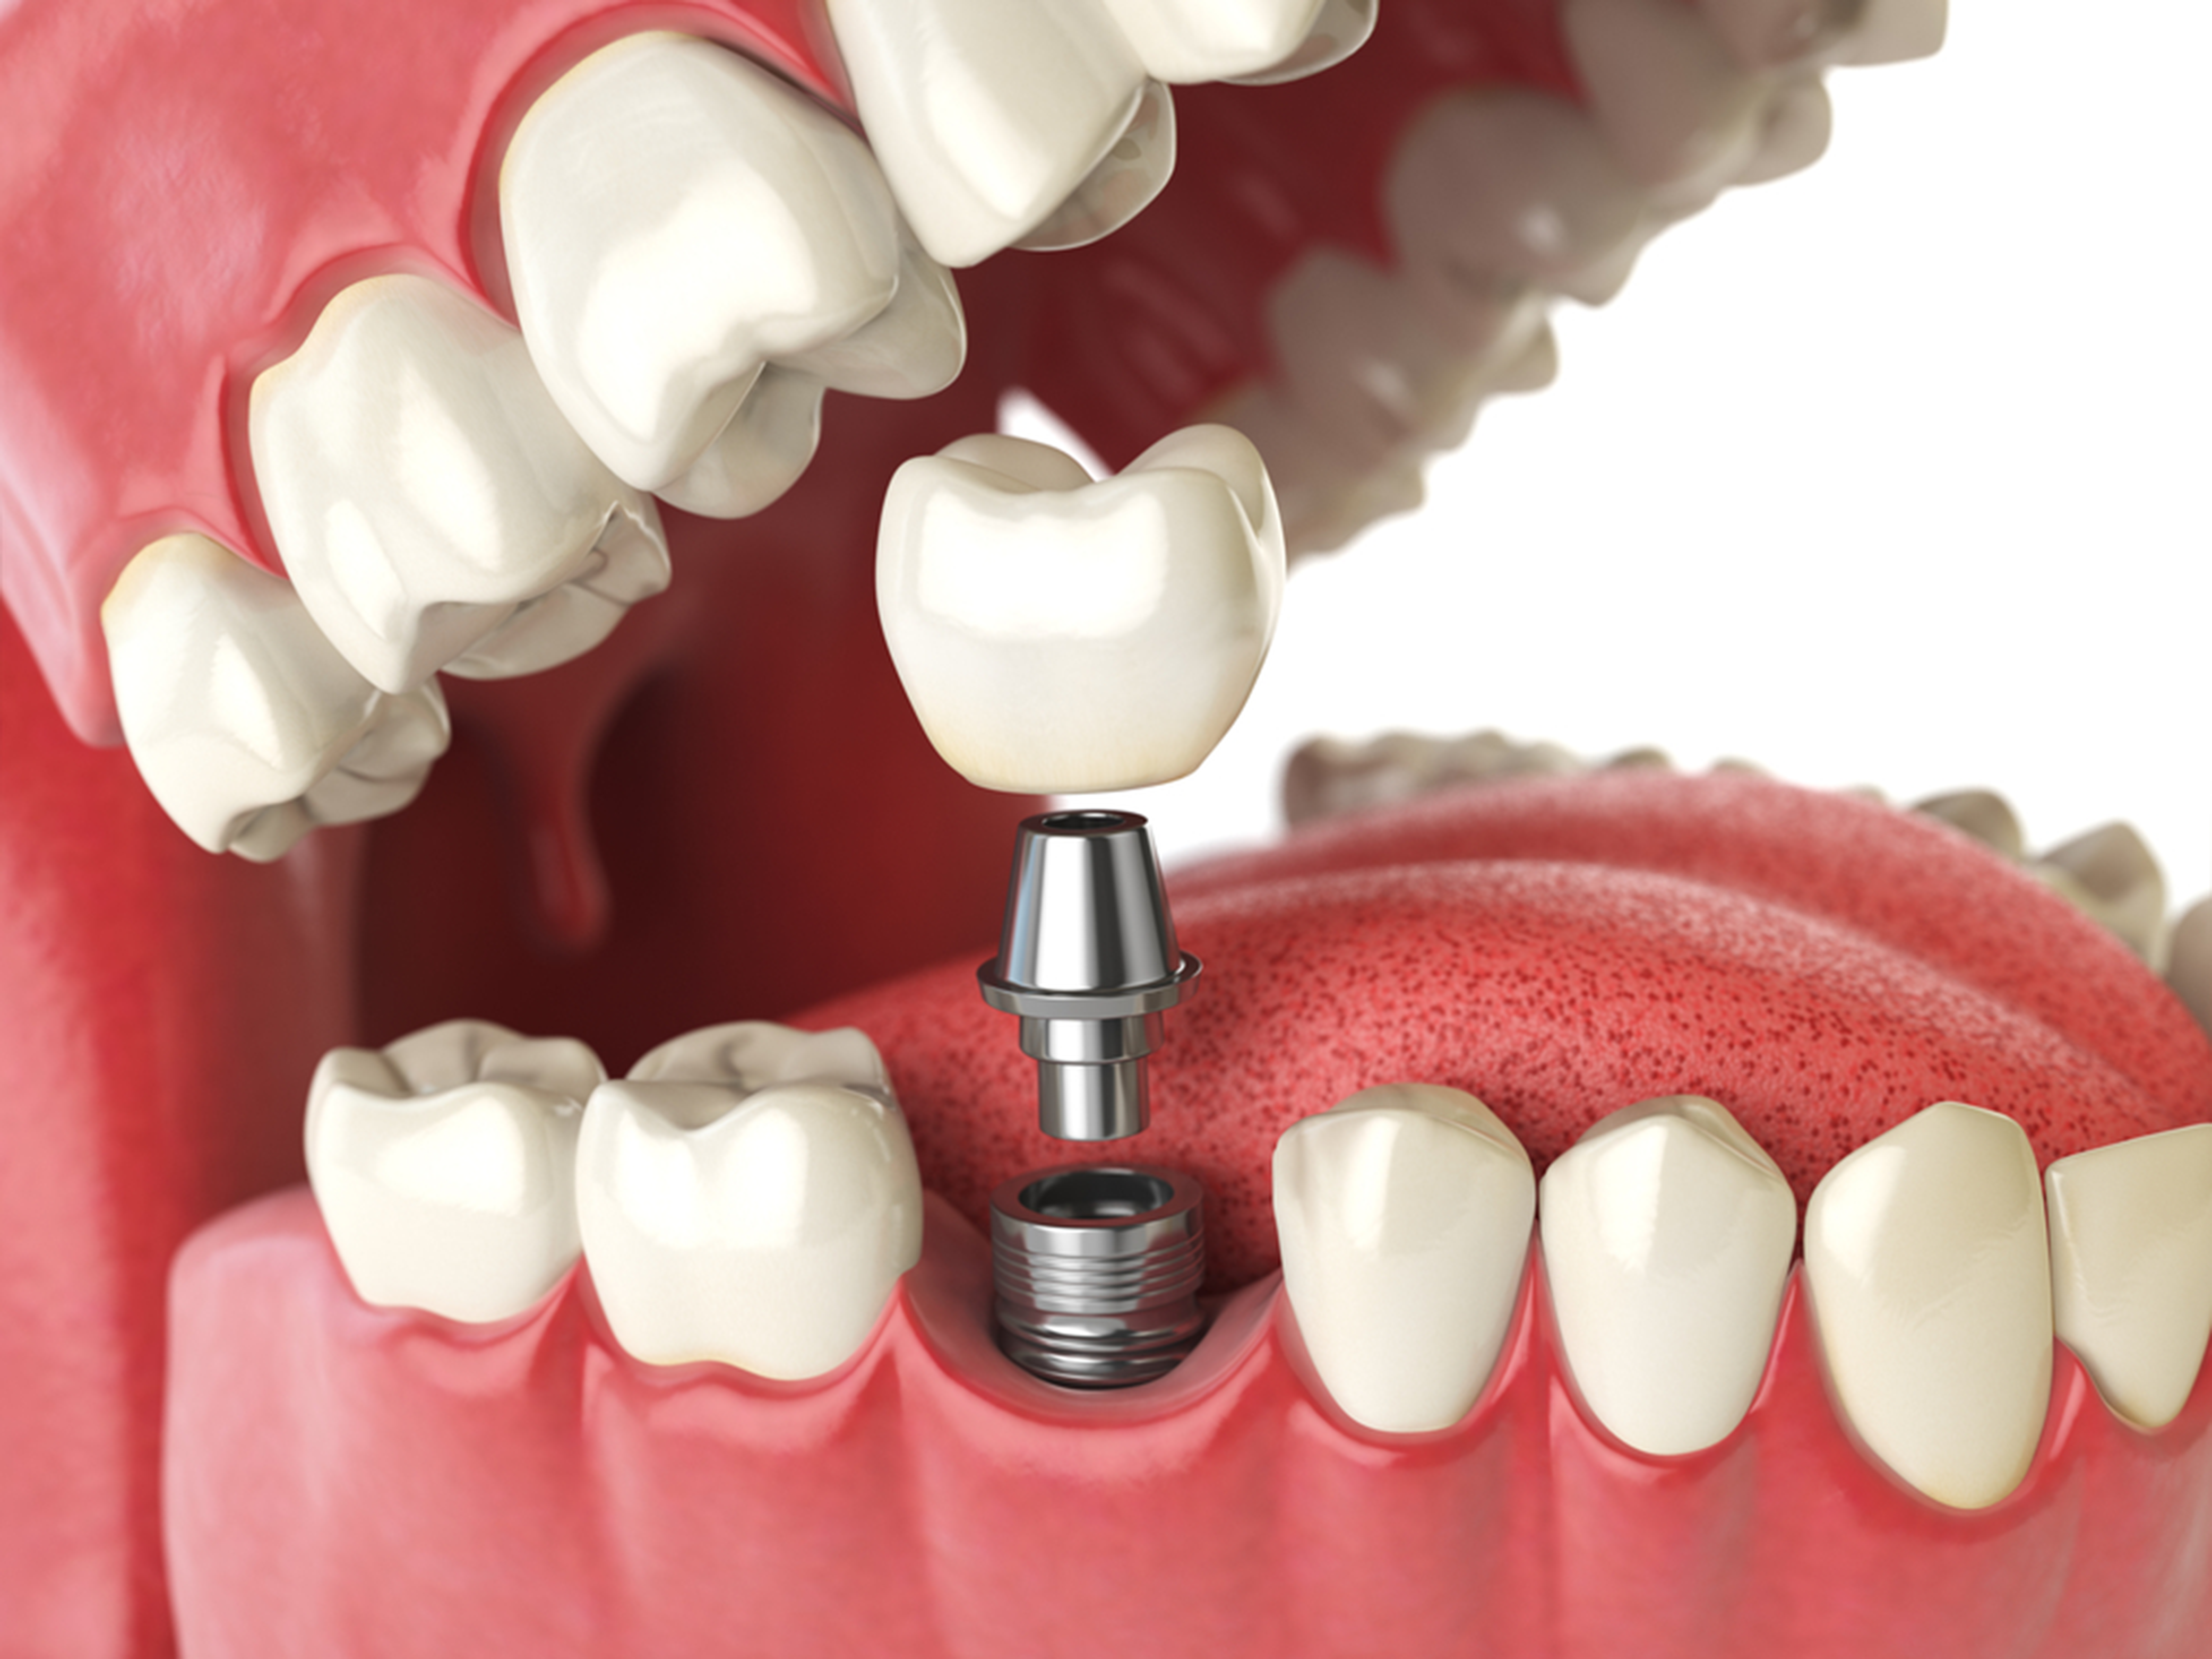 Dental Implants in Scarborough